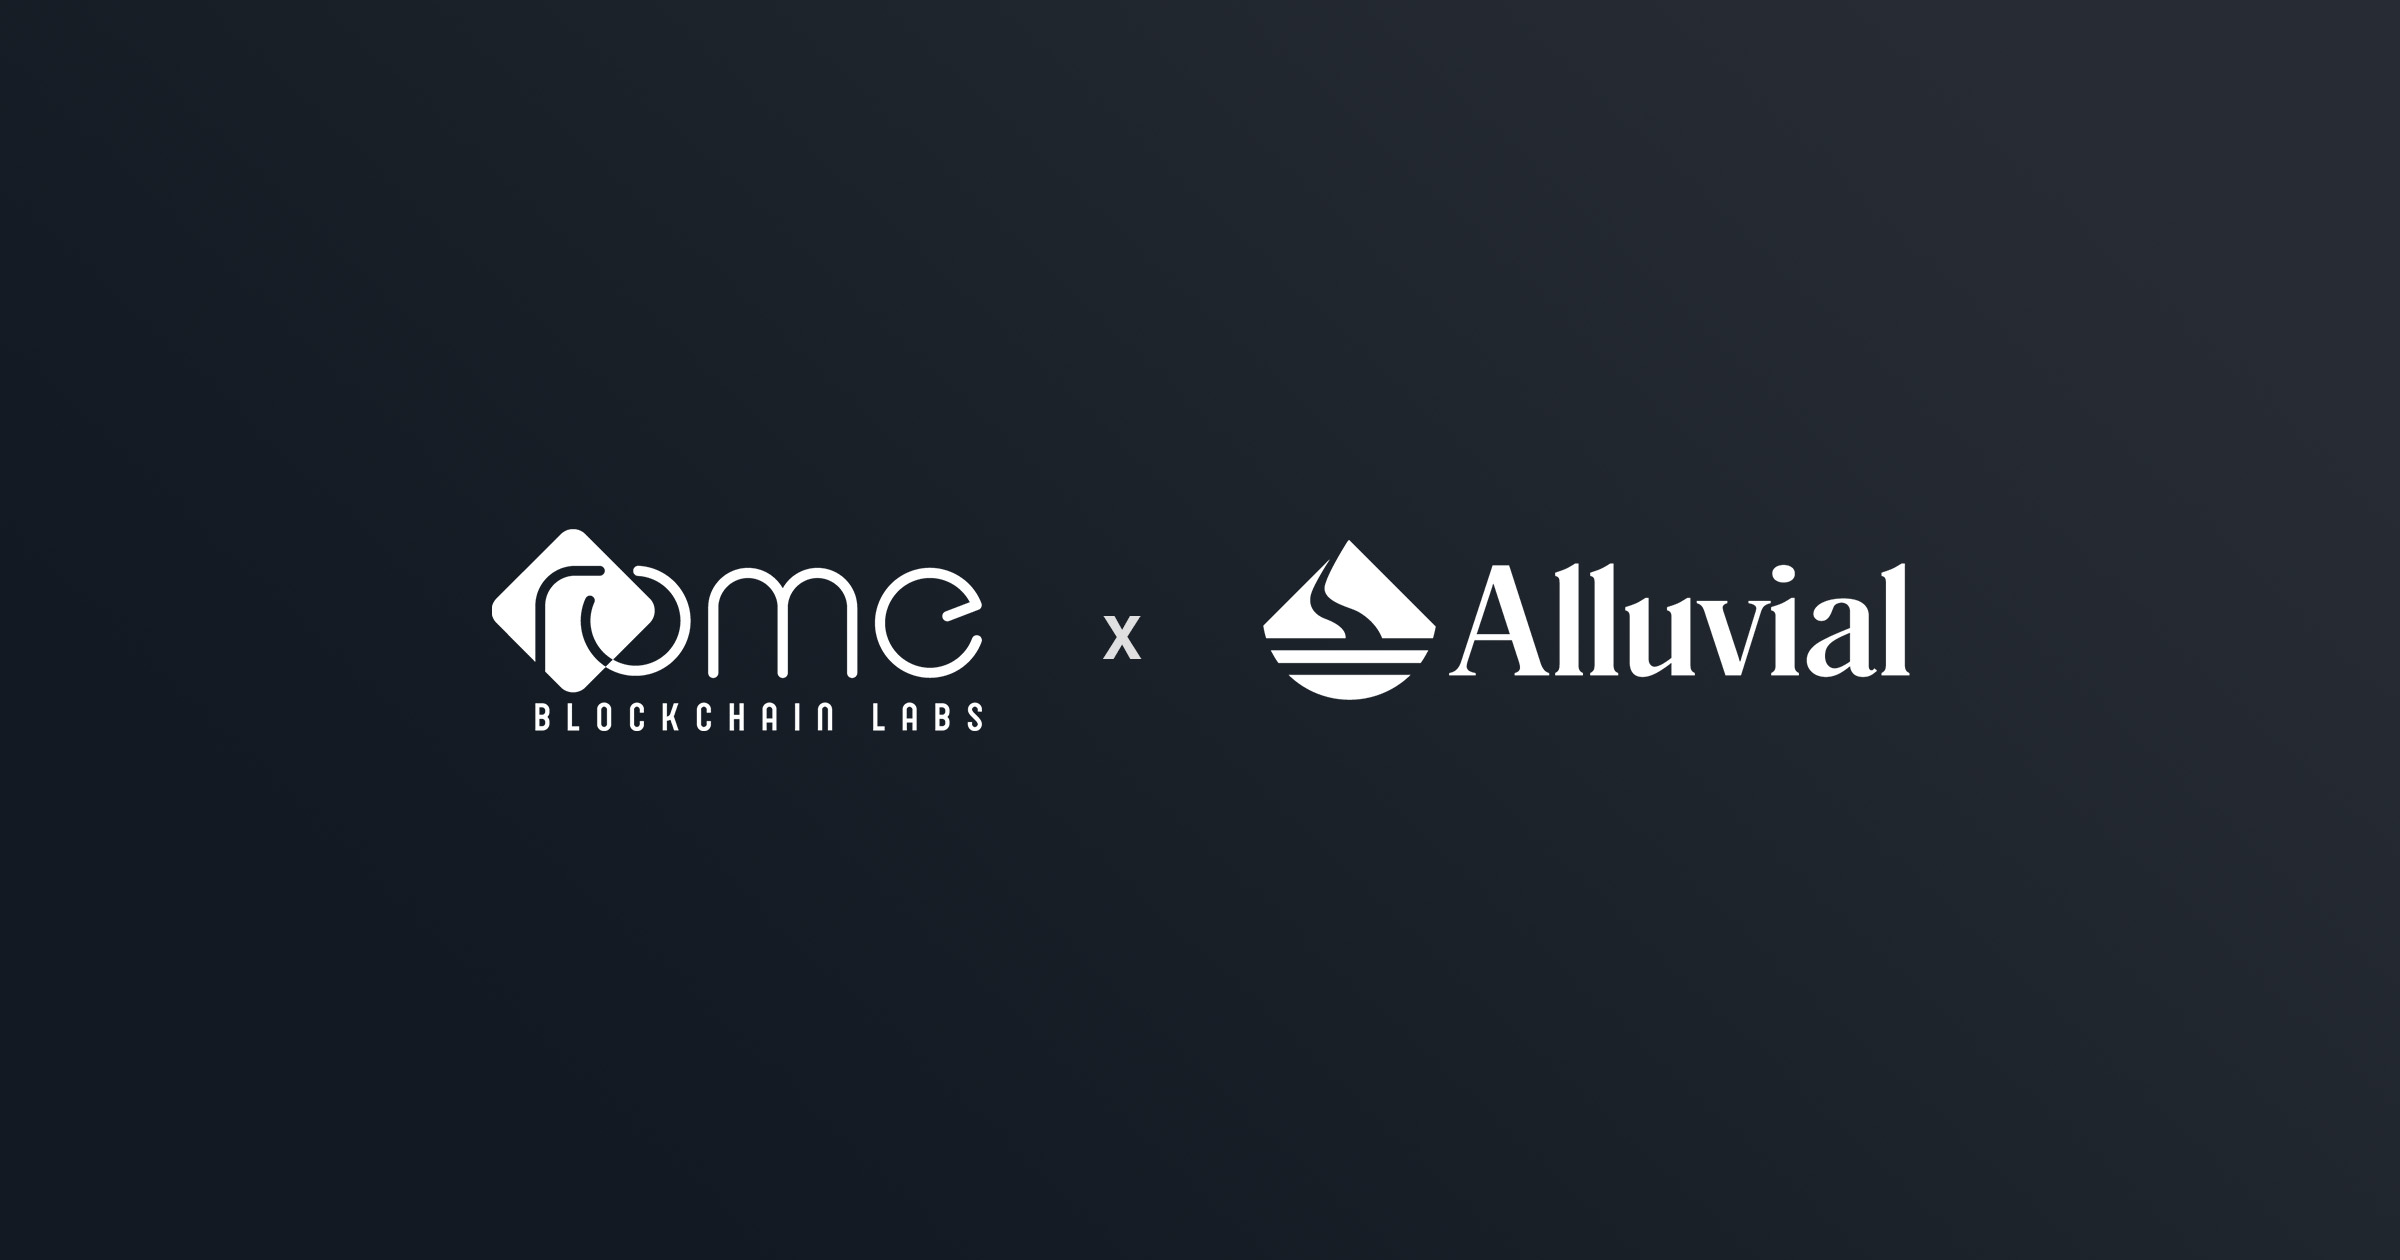 Rome Blockchain Labs Joins Alluvial to Provide Enterprise-Grade Avalanche (AVAX) Liquid Staking